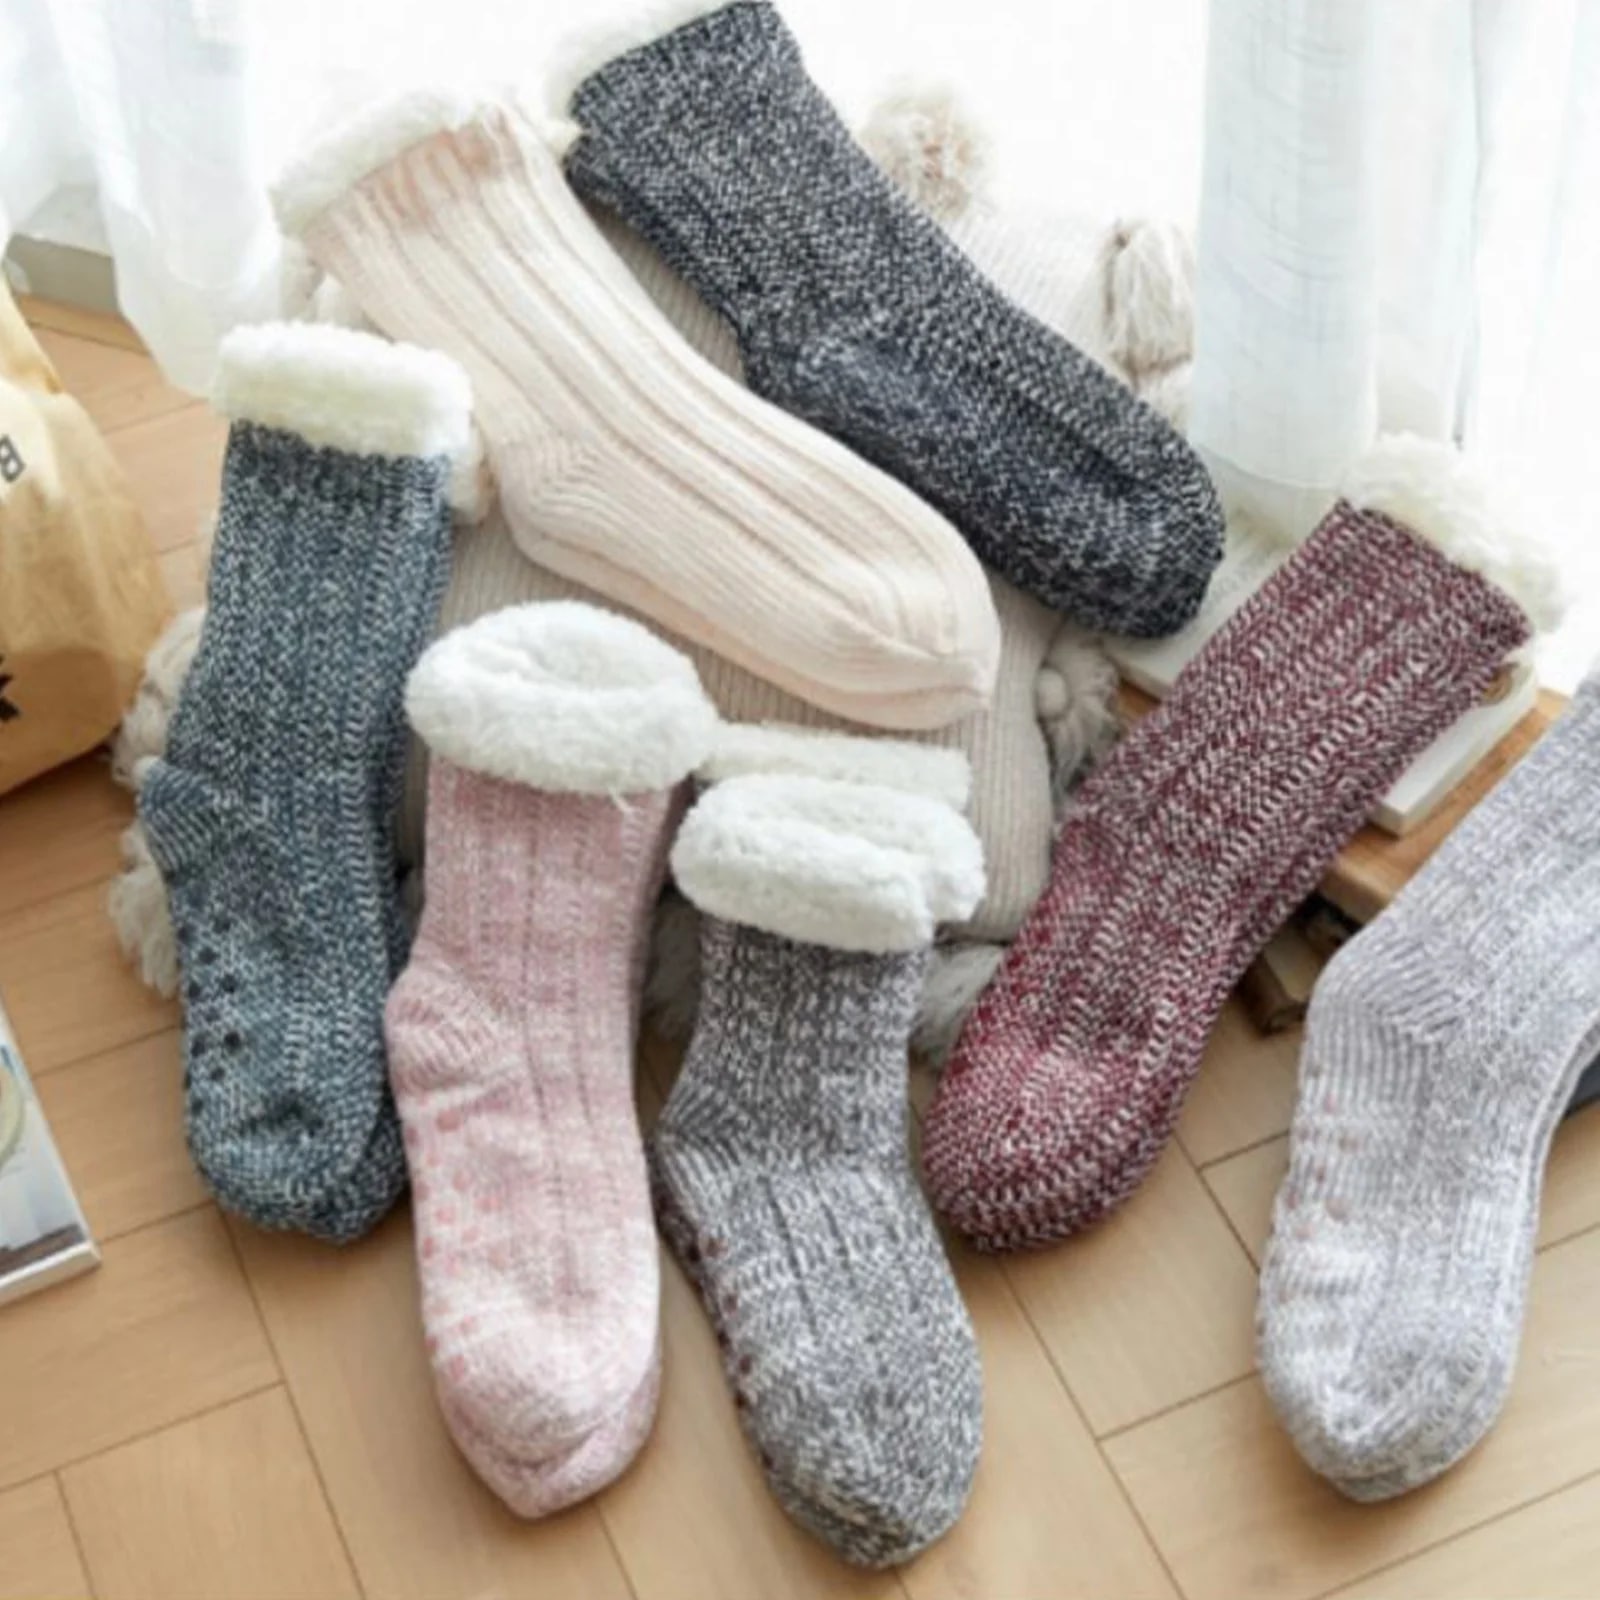 Long fur patterned socks 2 Light grey Mons  Color From AL Samah